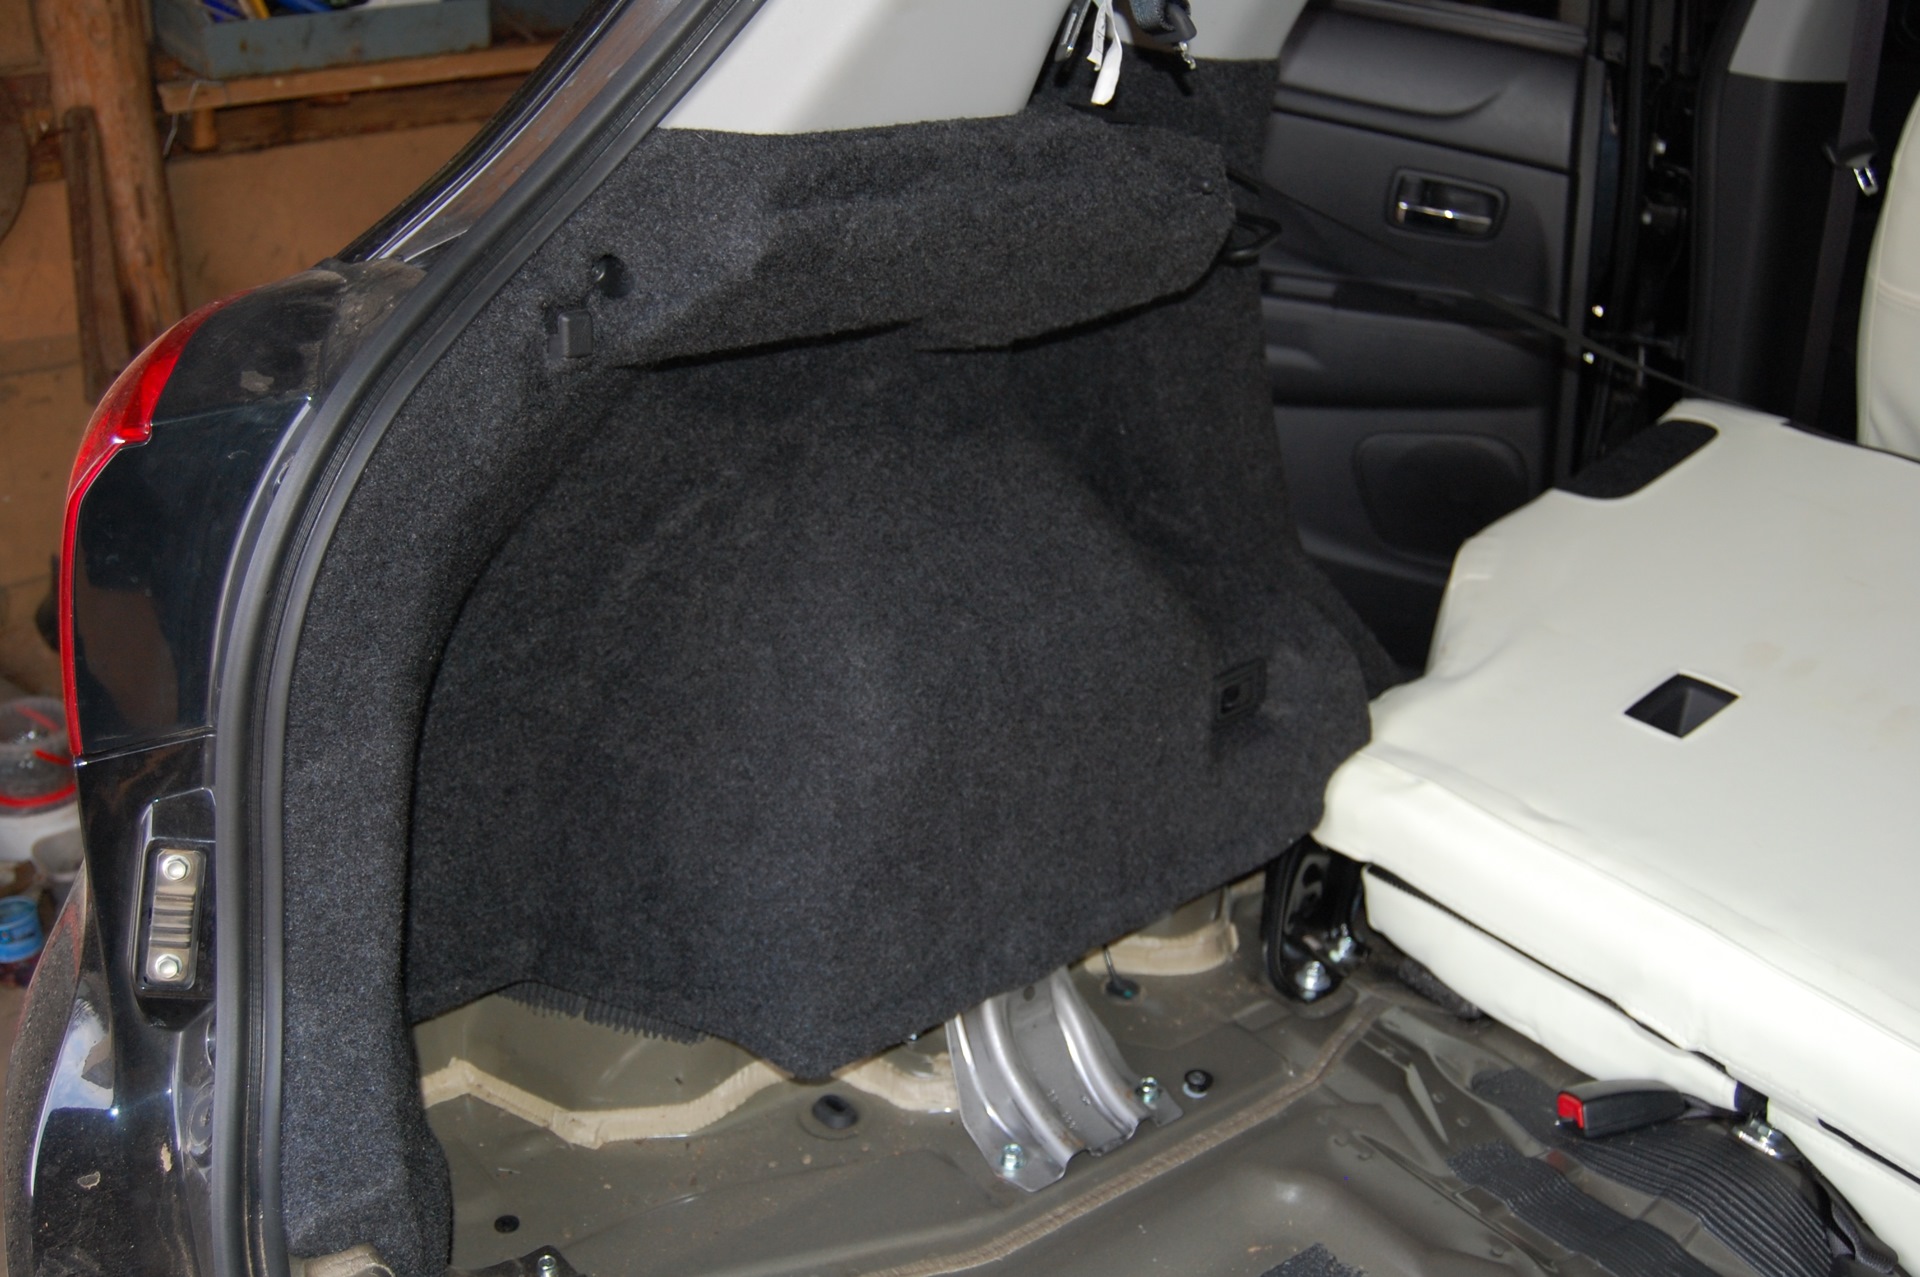 Оклейка багажника карпетом. Обшивка карпетом багажника Mitsubishi Outlander 3. Обшивка карпетом багажника Лансер 10. Отделка багажника карпетом Митсубиси Аутлендер 3. Обклеить багажник карпетом.